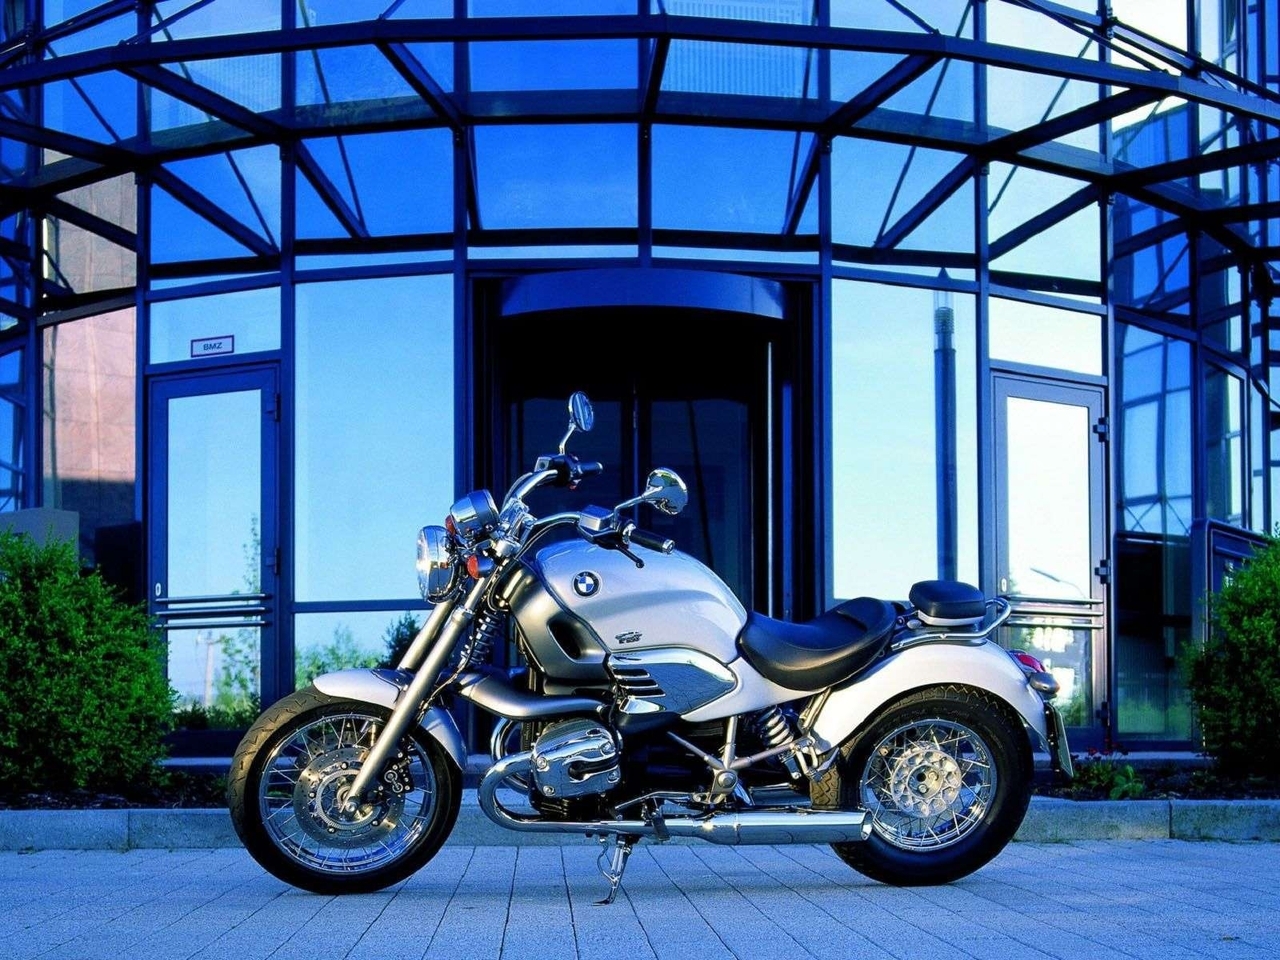 Image: Motorcycle, bike, BMW, silver, building